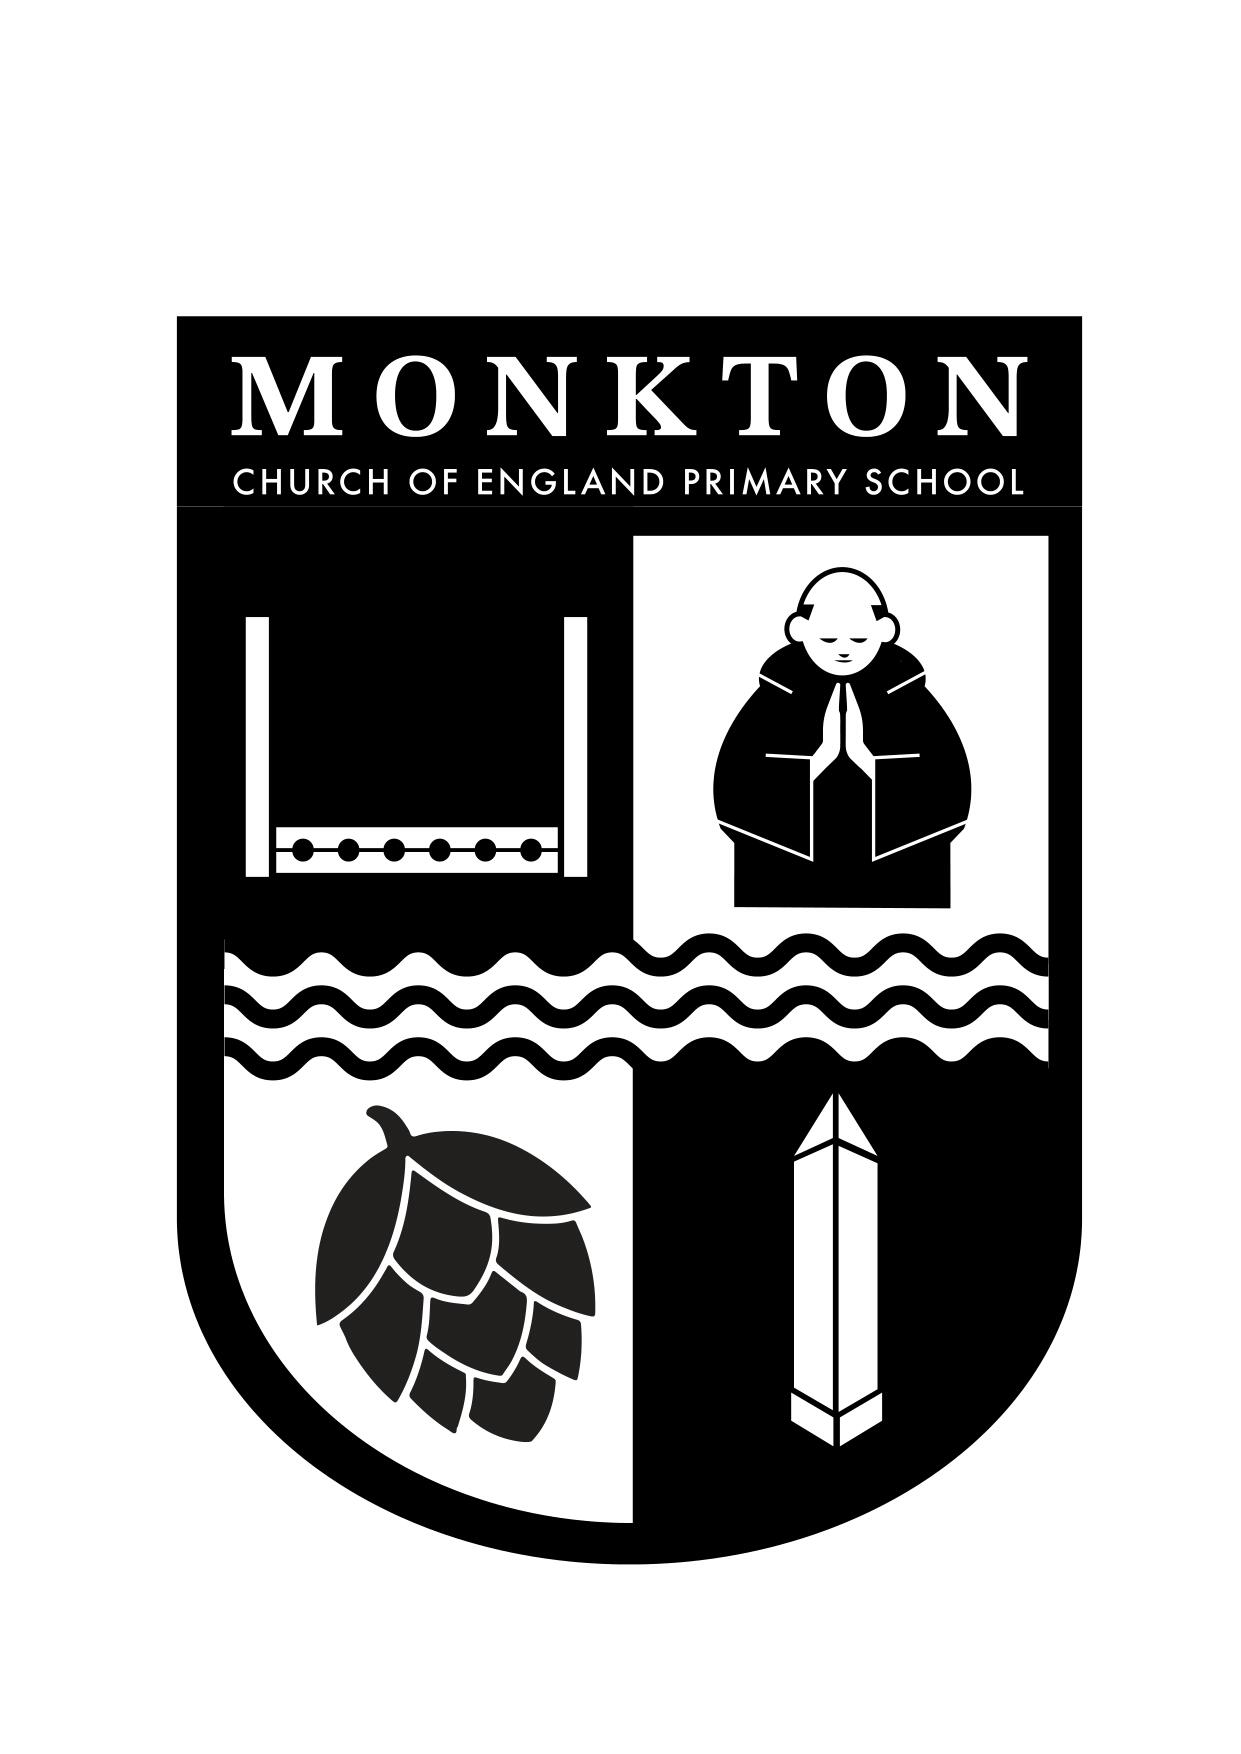 Monkton Church of England Primary School